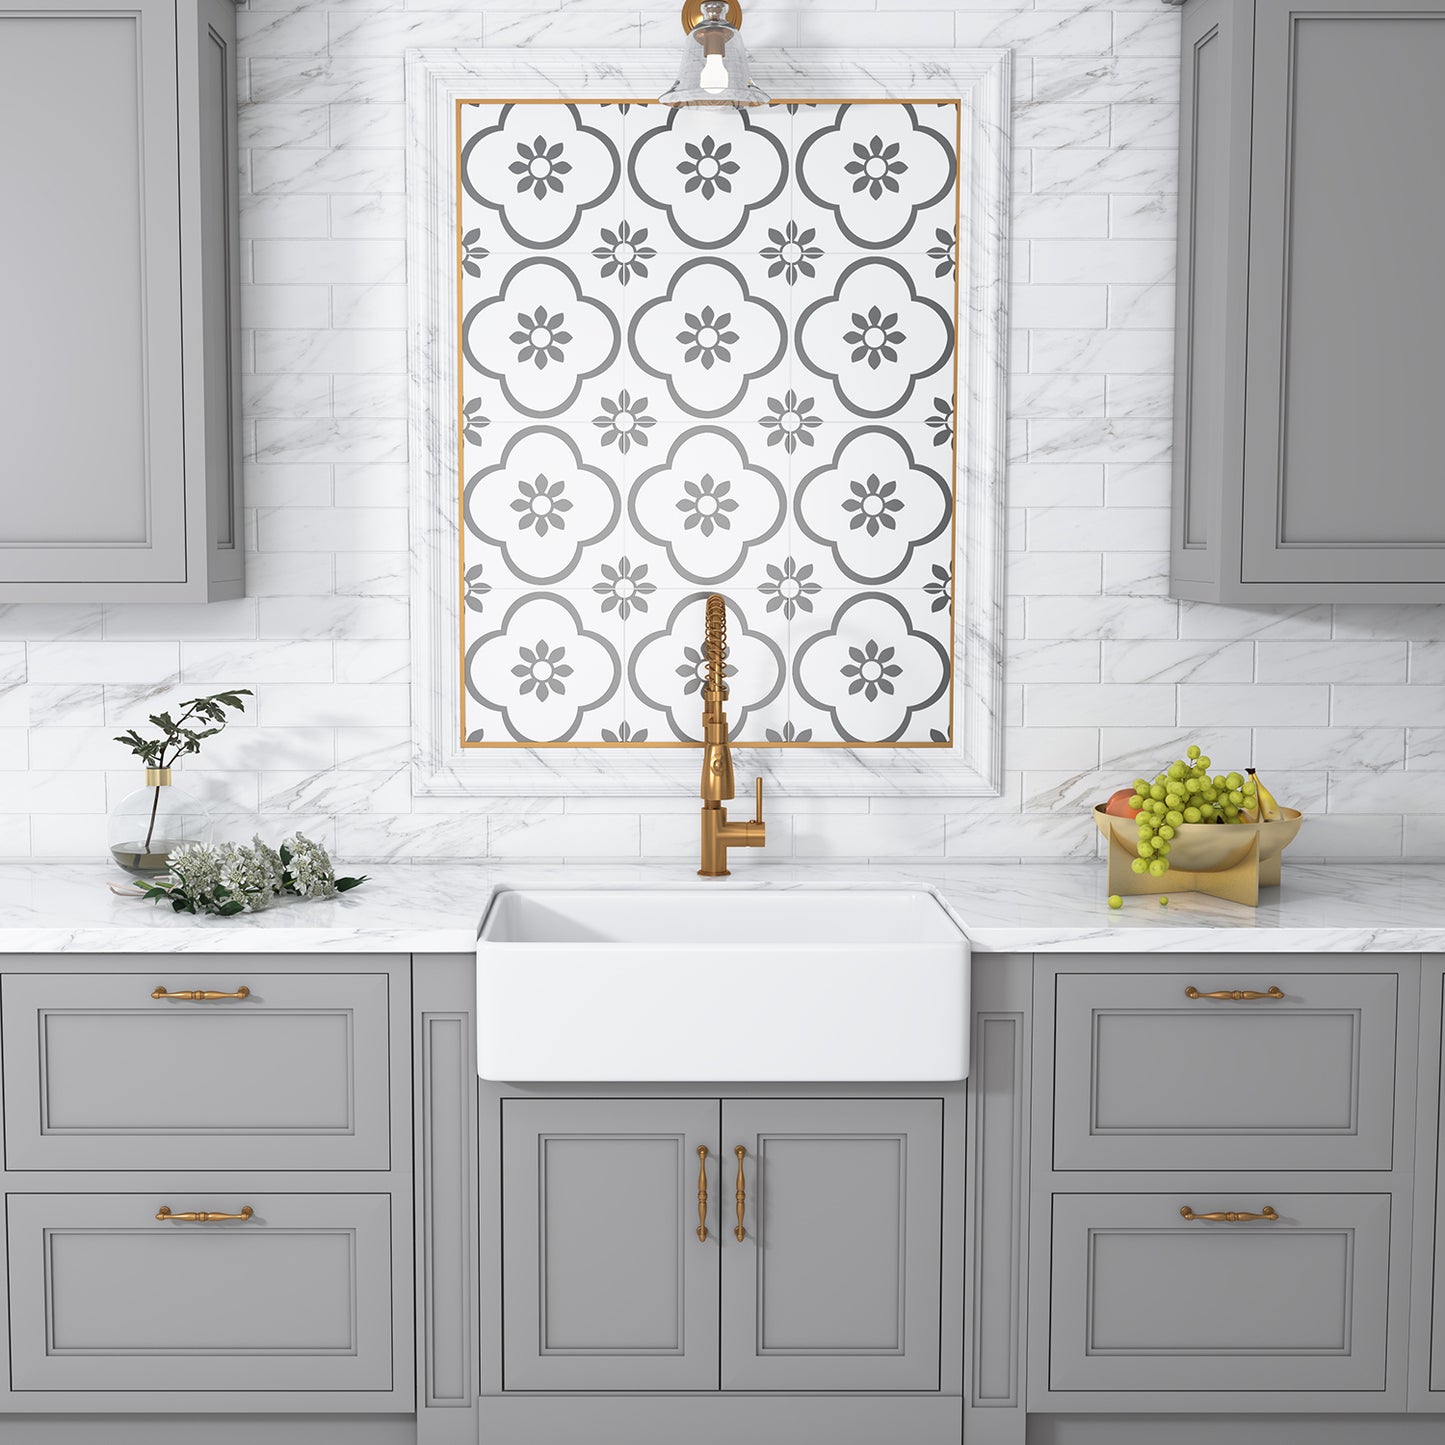 Treviso Glossy White Ceramic Rectangular 30" L x 19.7" W Vessel Bathroom Sink